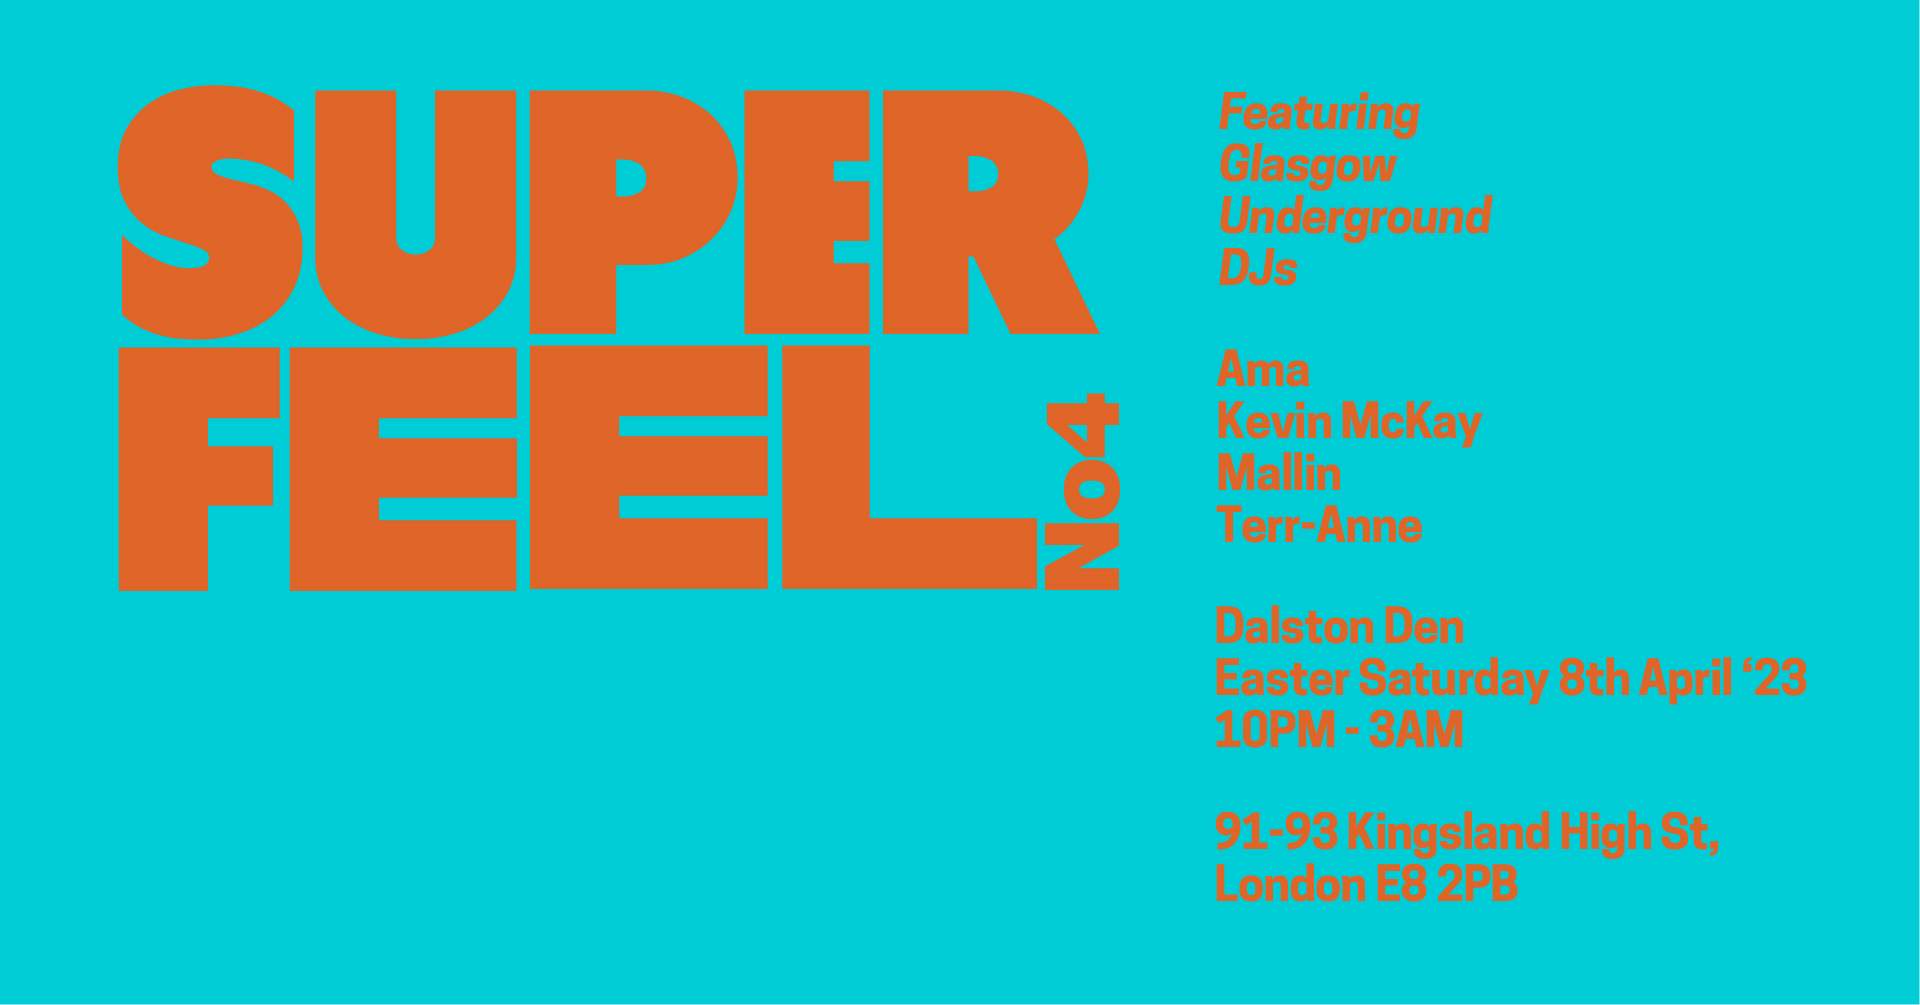 Superfeel #4 with Kevin McKay, Terri-Anne, Mallin, Ama - フライヤー裏